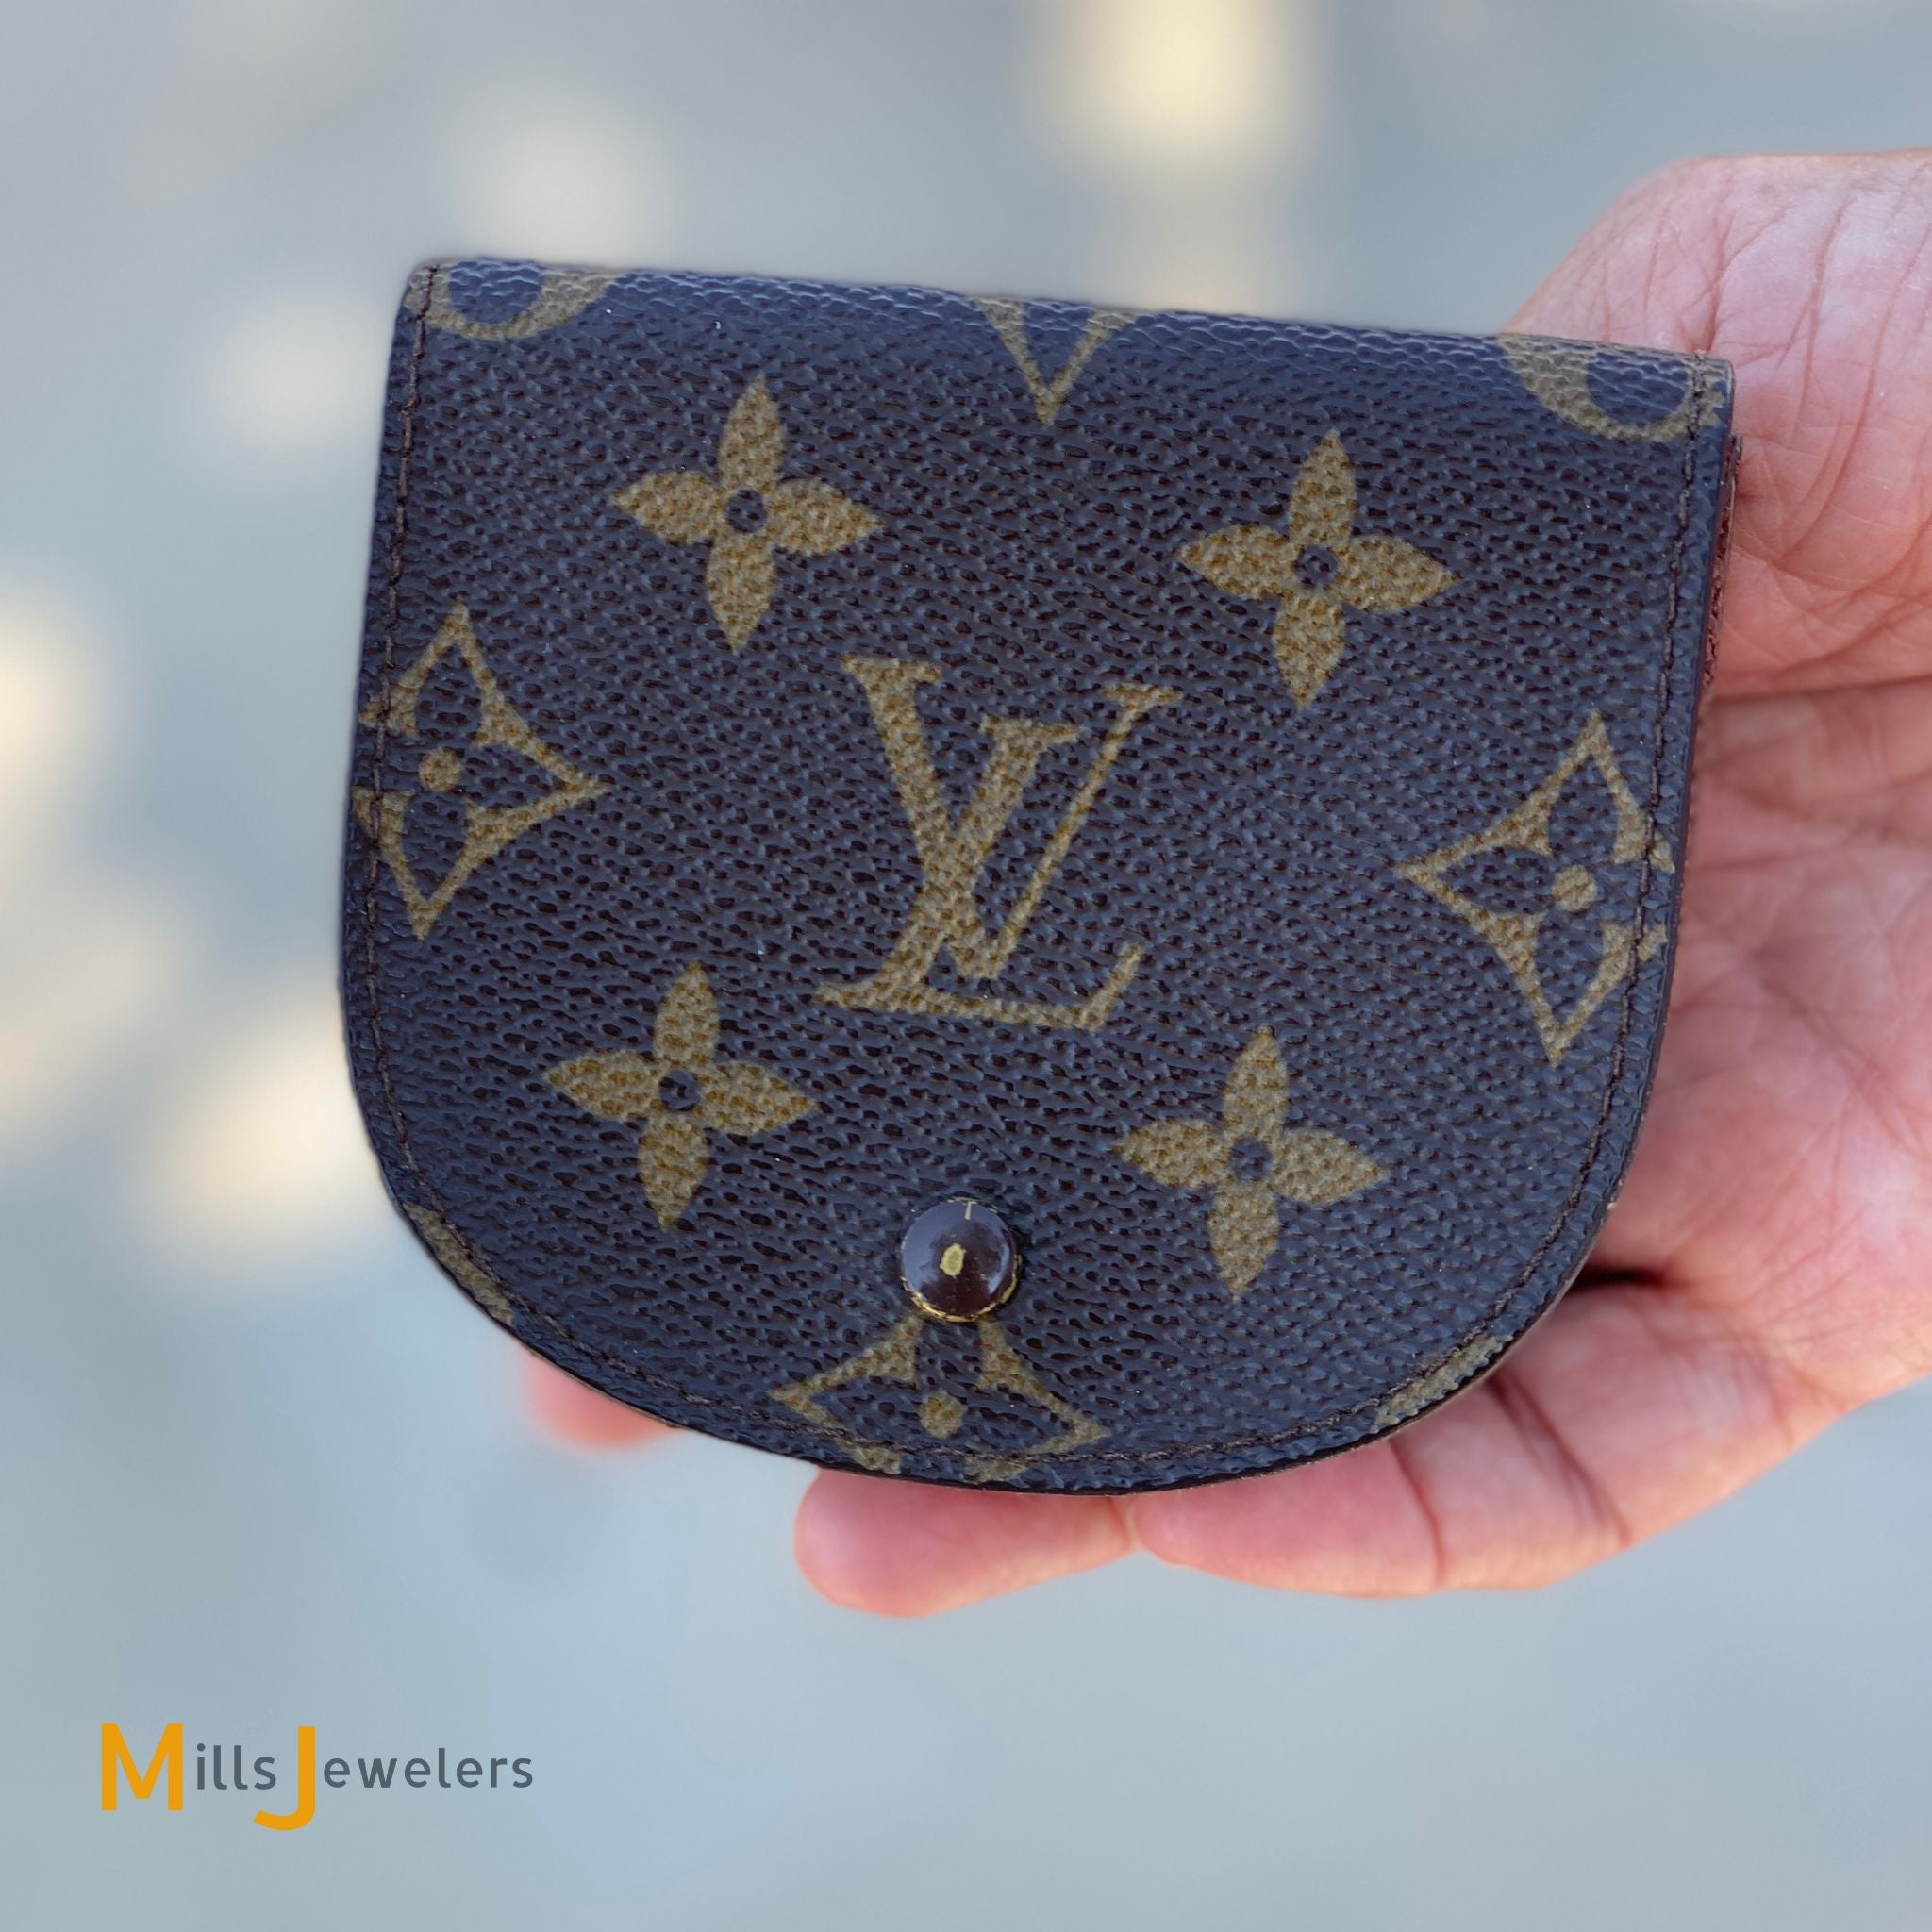  Louis Vuitton - Women's Handbags, Purses & Wallets